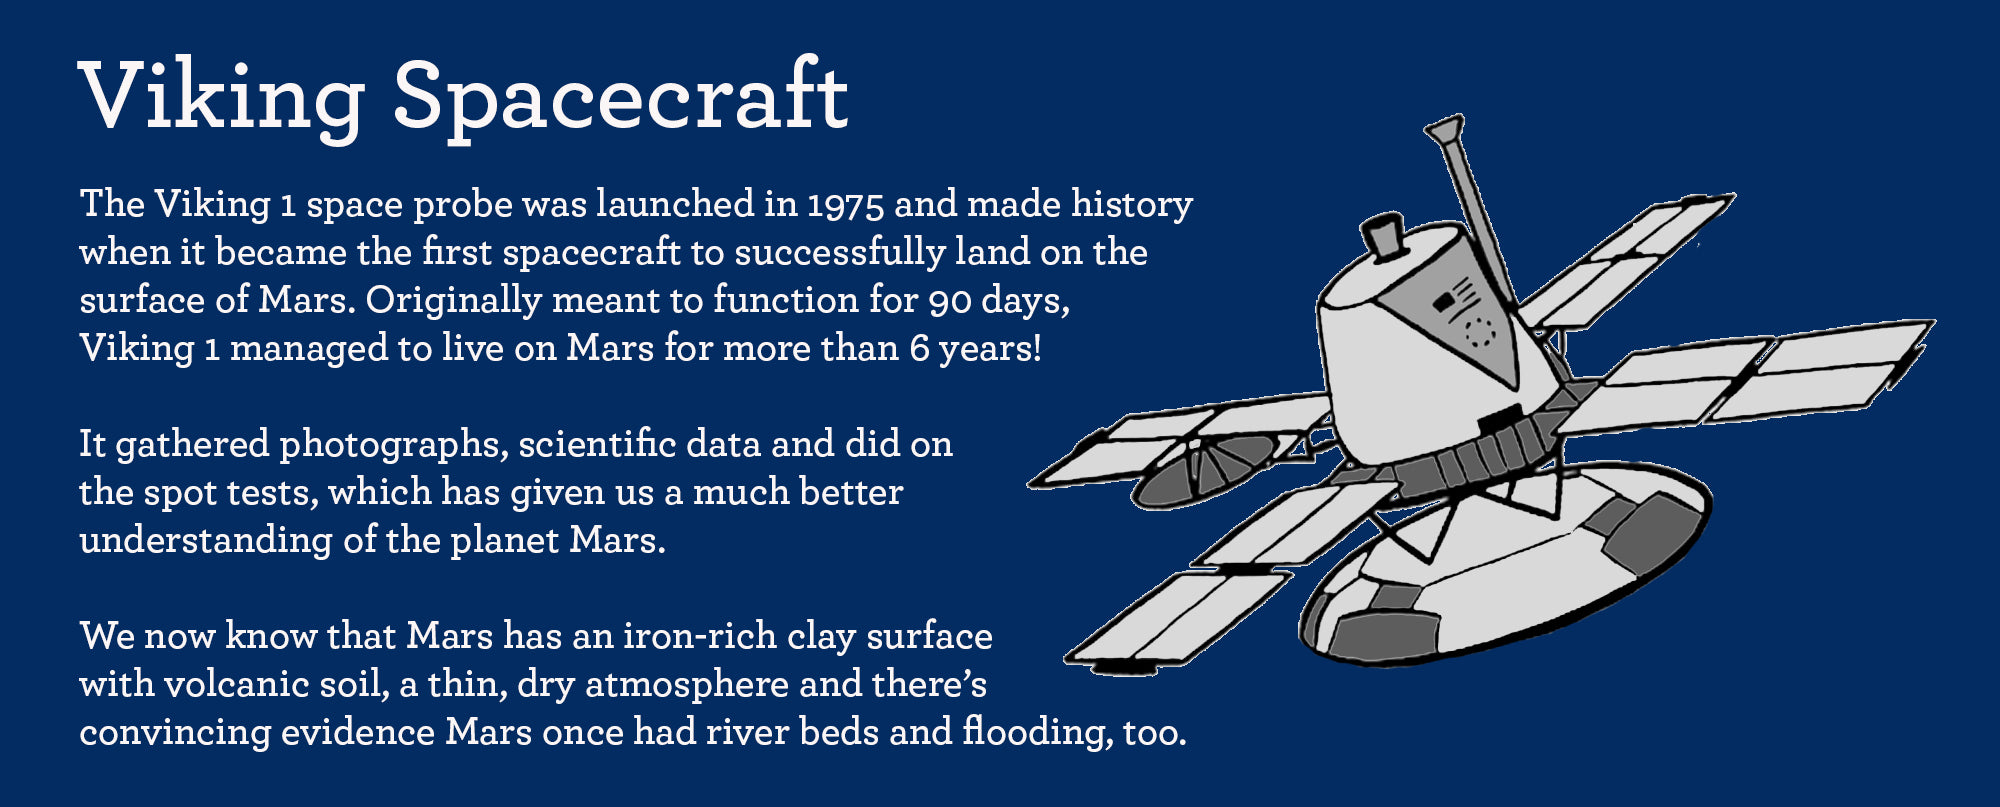 viking spacecraft facts